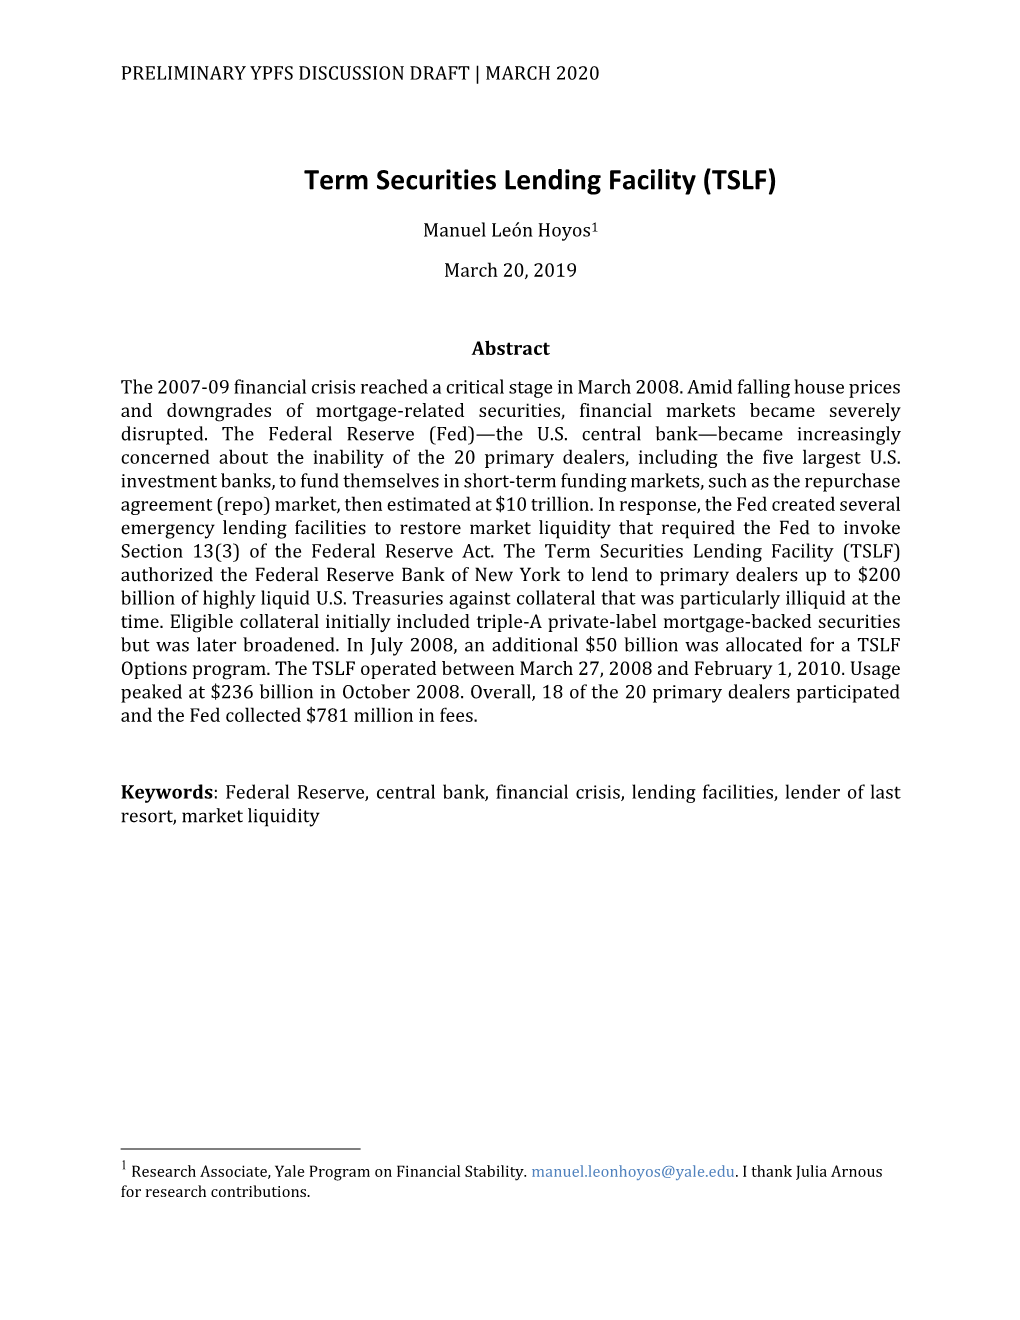 Term Securities Lending Facility (TSLF)